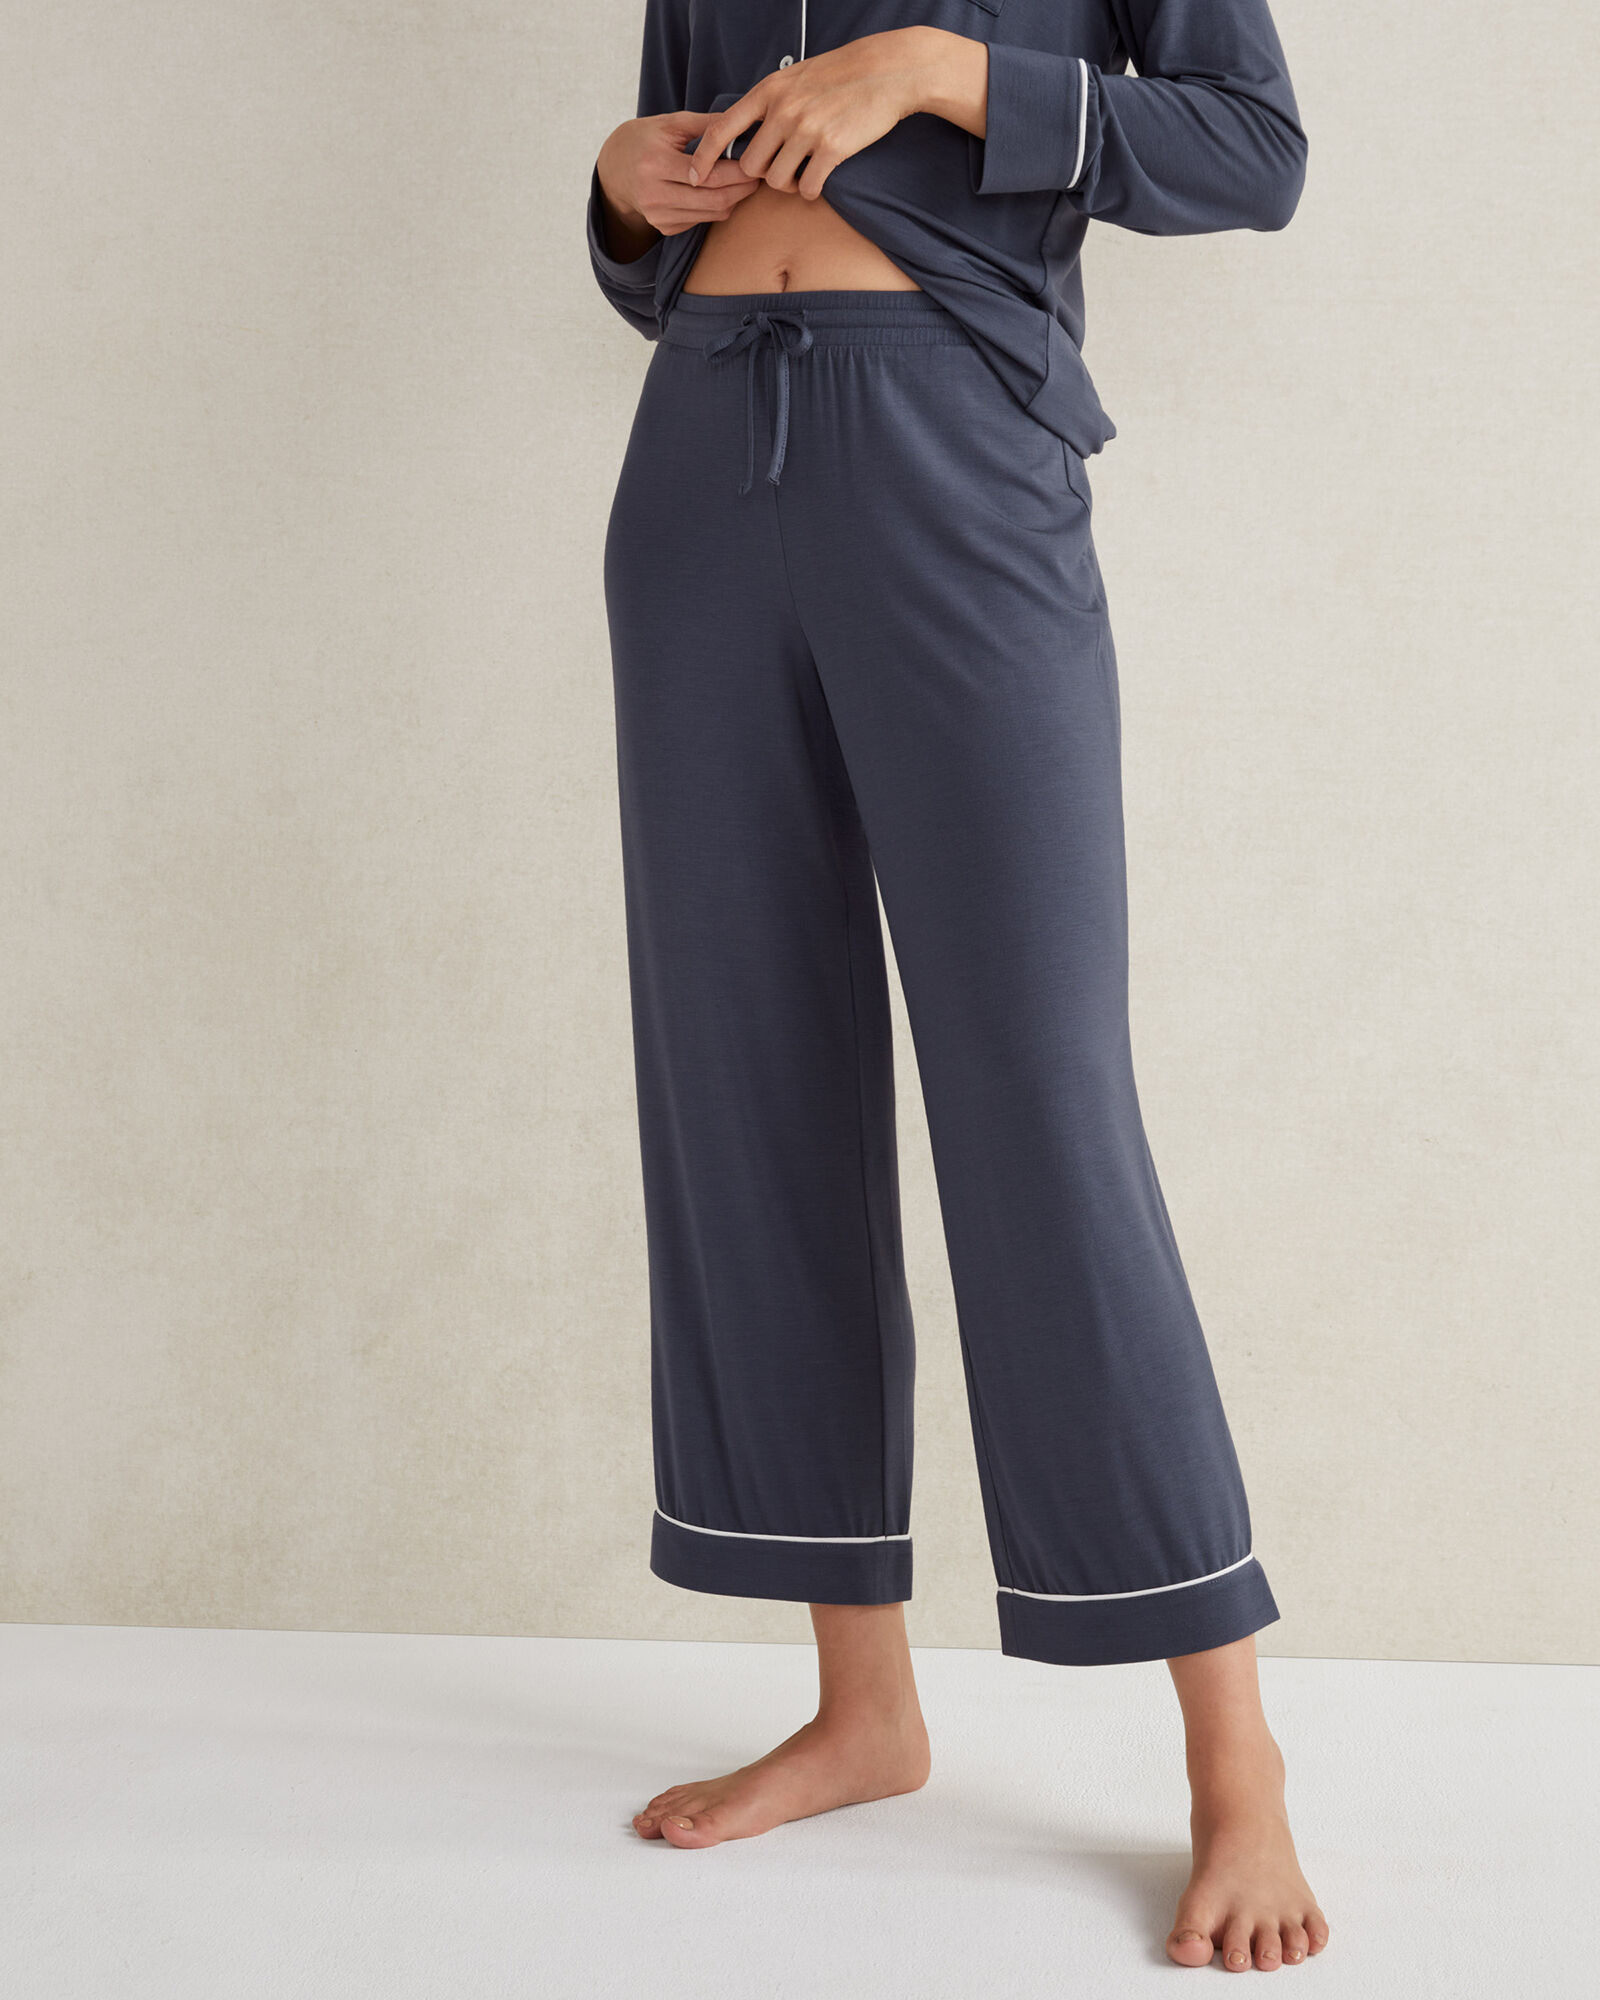 Ultra Soft Modal Pajama Pants Lounge Pants Women Wide Leg Sleep